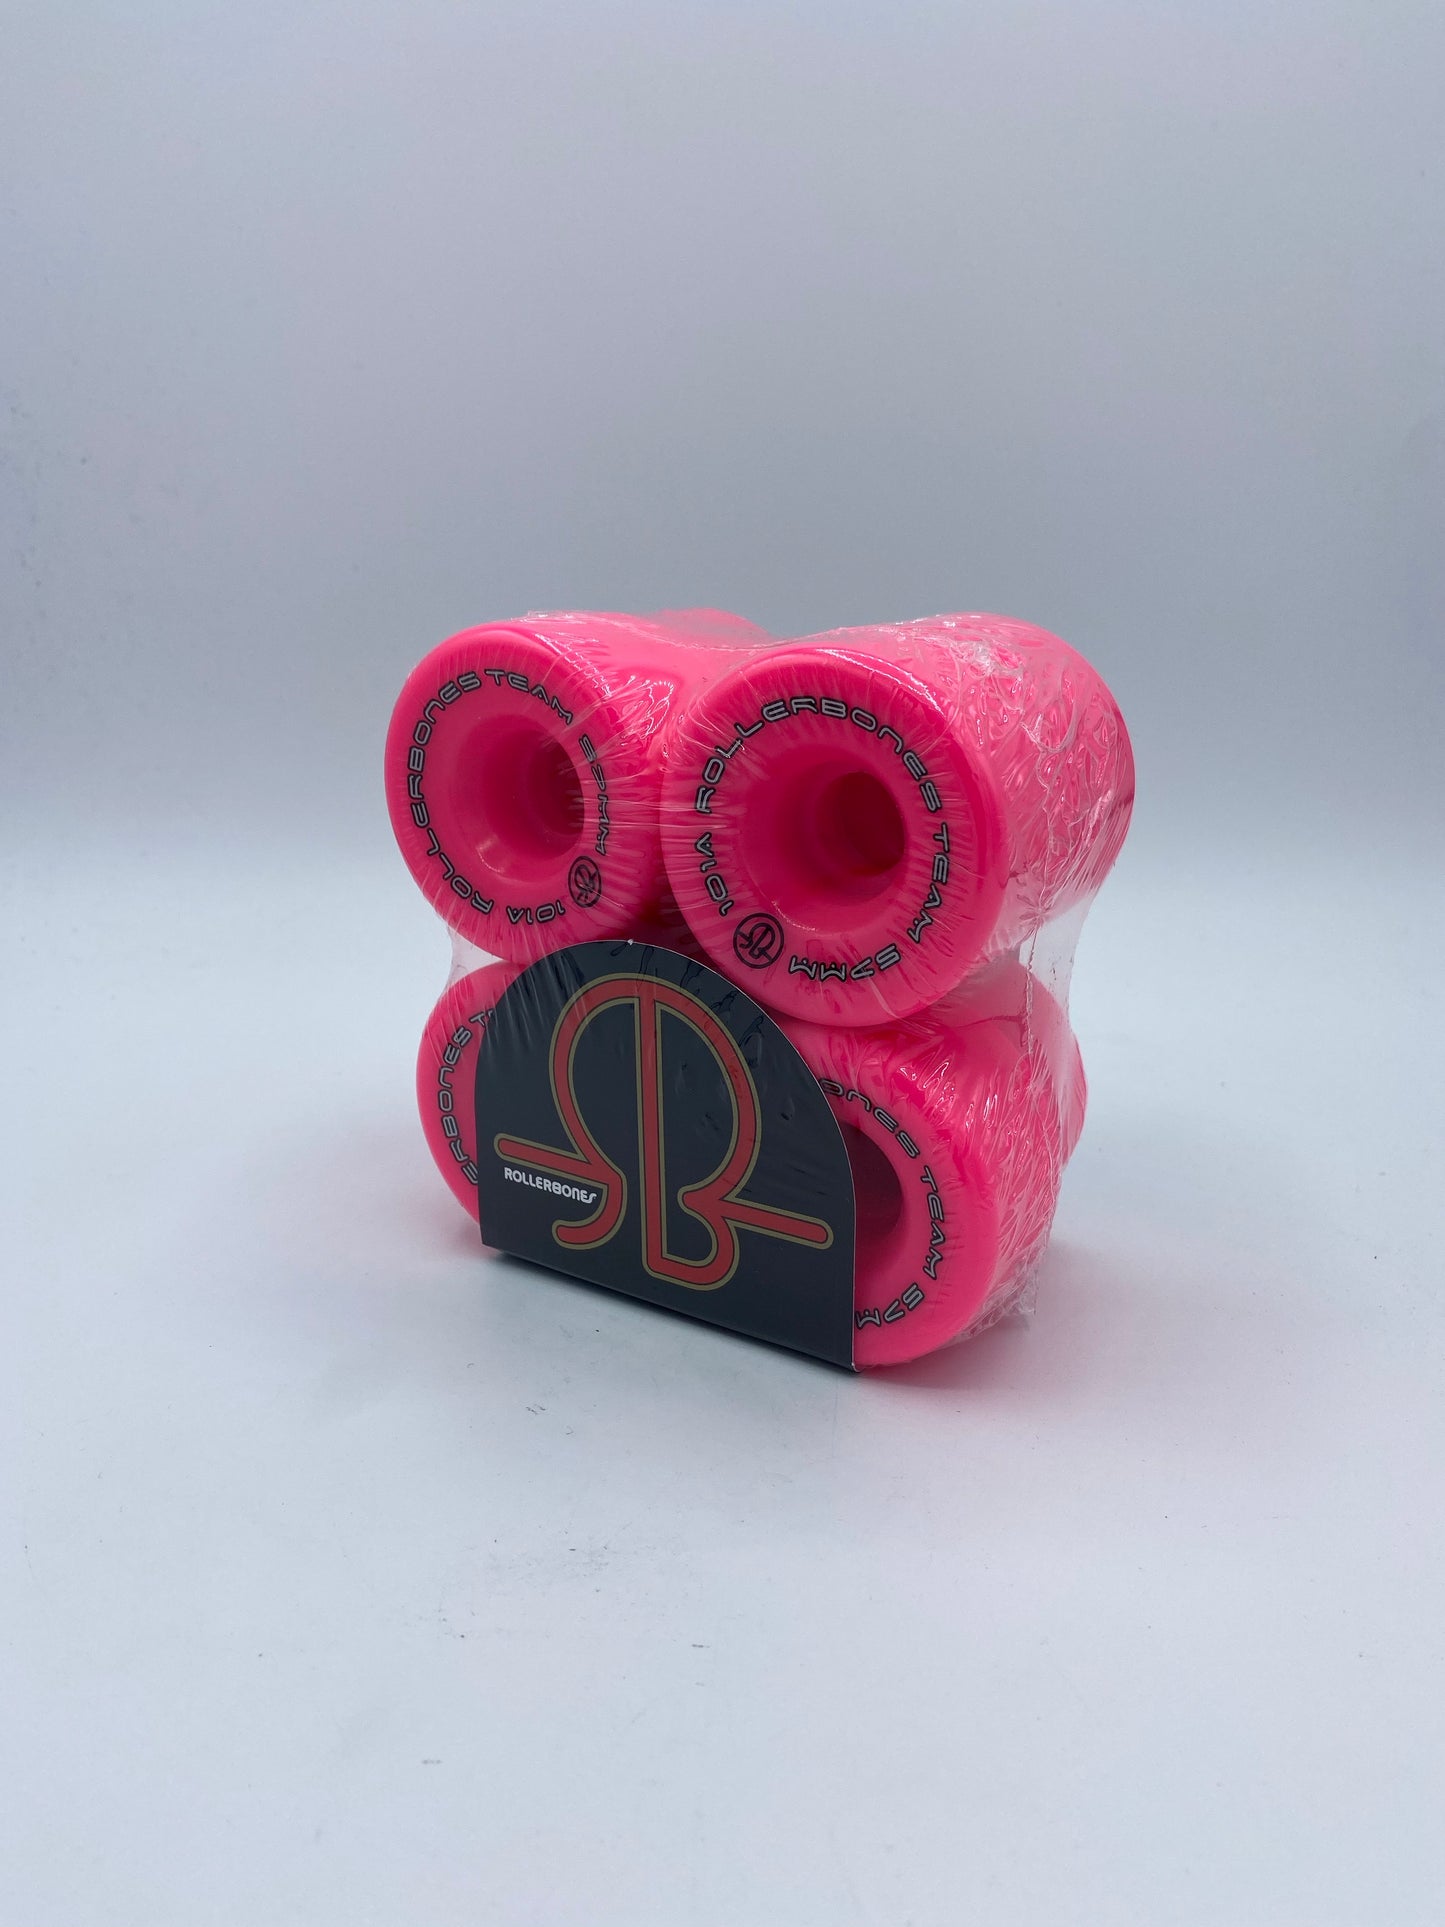 ROLLERBONES | Team Logo Pink Wheels | 57mm 101a